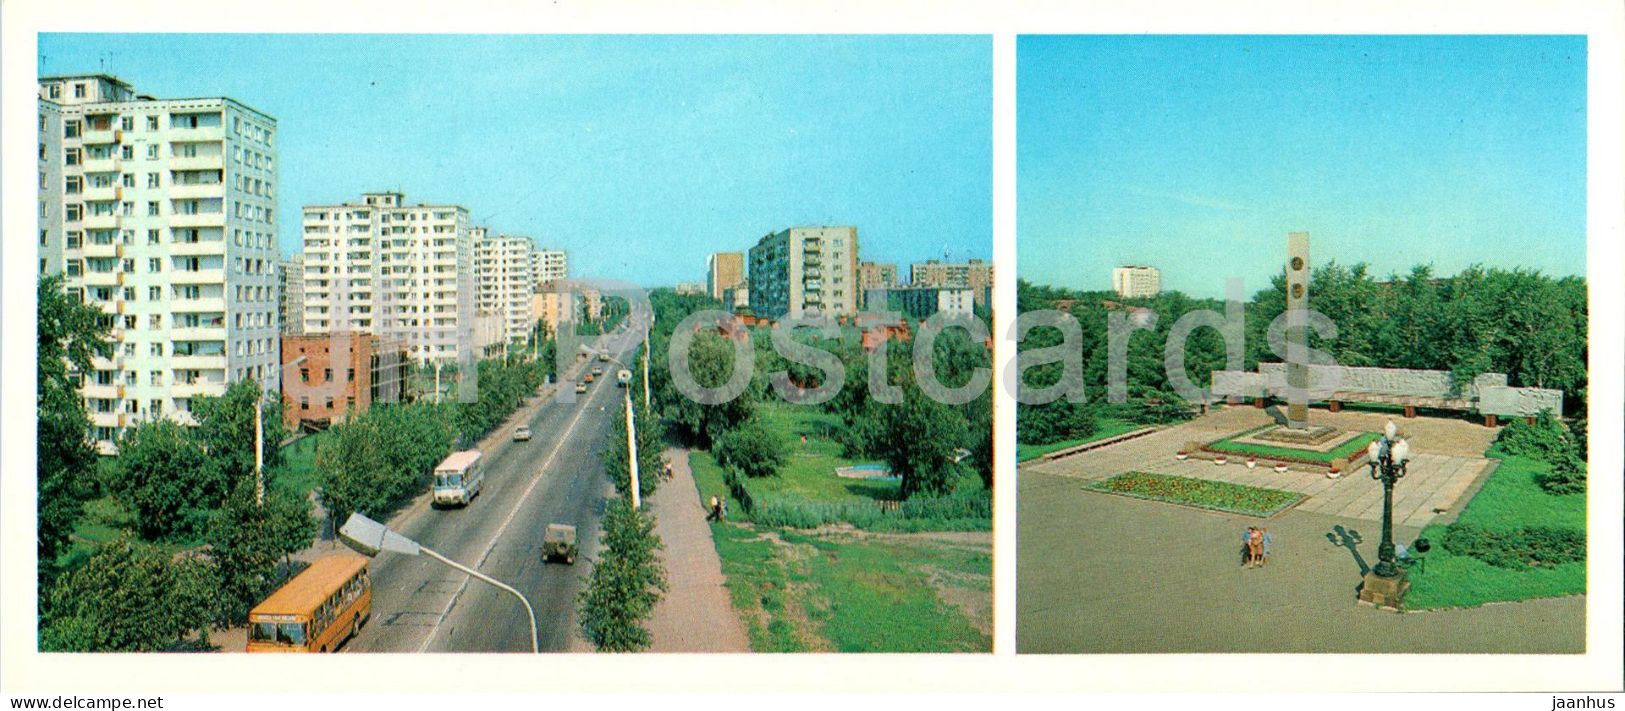 Omsk - Krasnyi Put Street - Obelisk - Bus - 1982 - Russia USSR - Unused - Russie